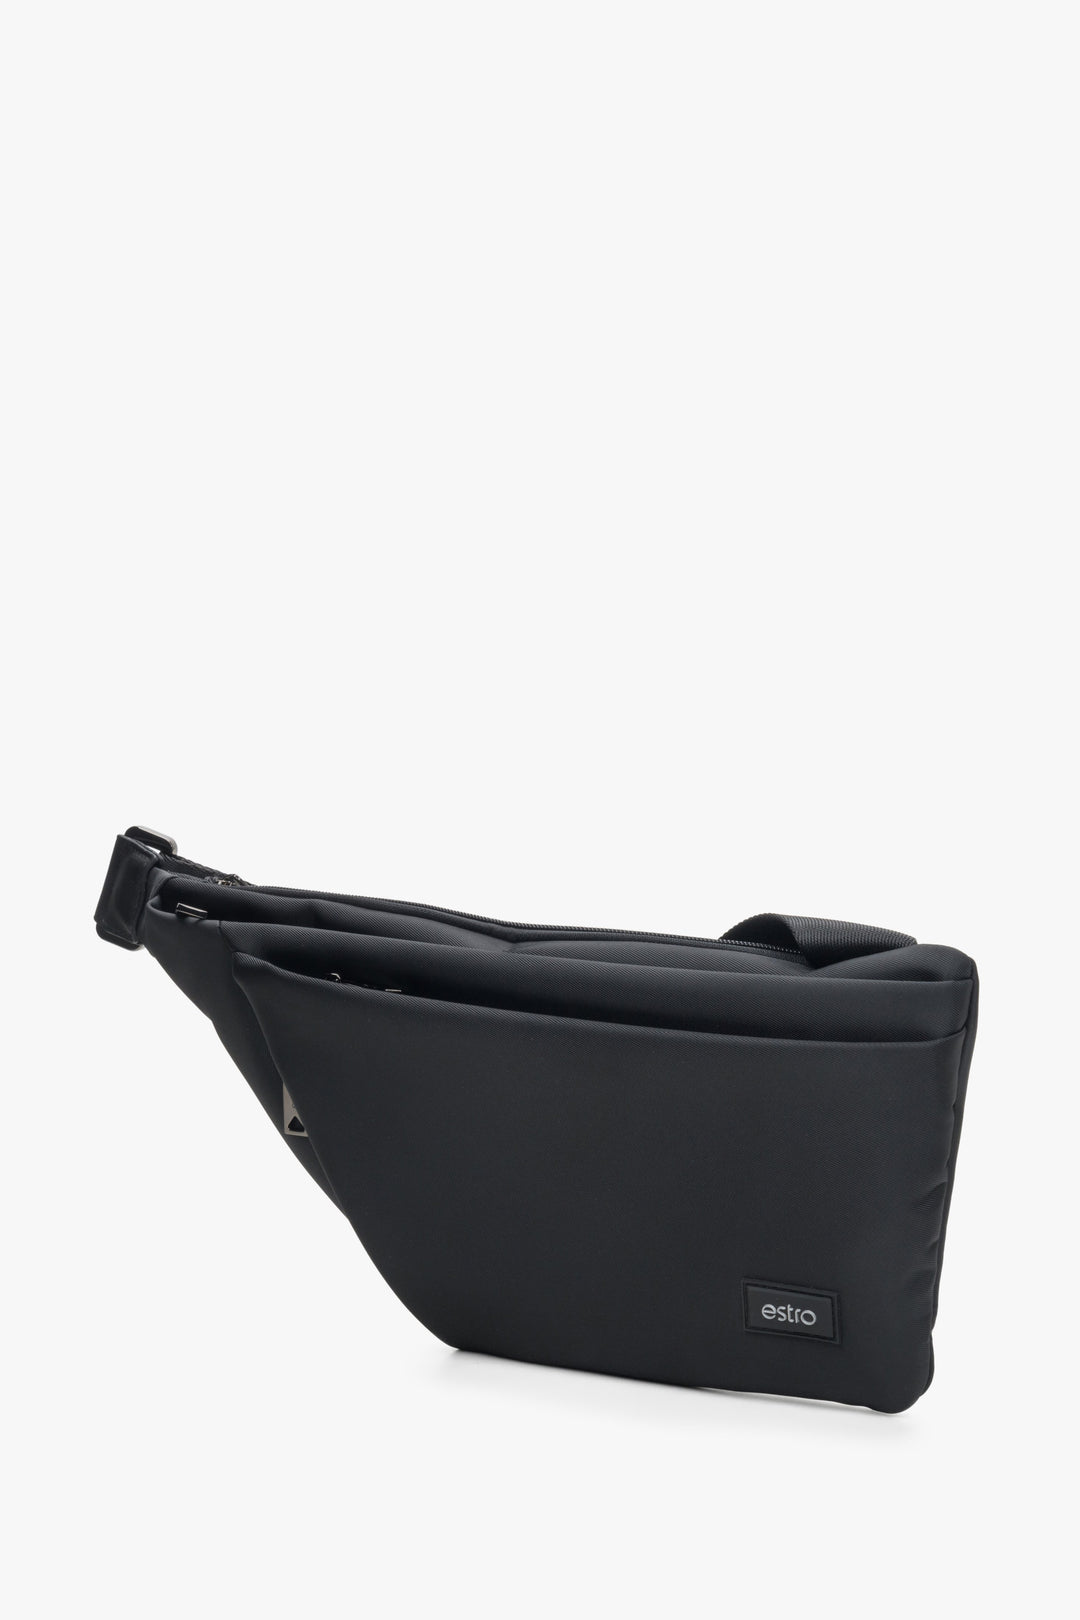 Men's spacious black waist bag with adjustable strap by Estro.